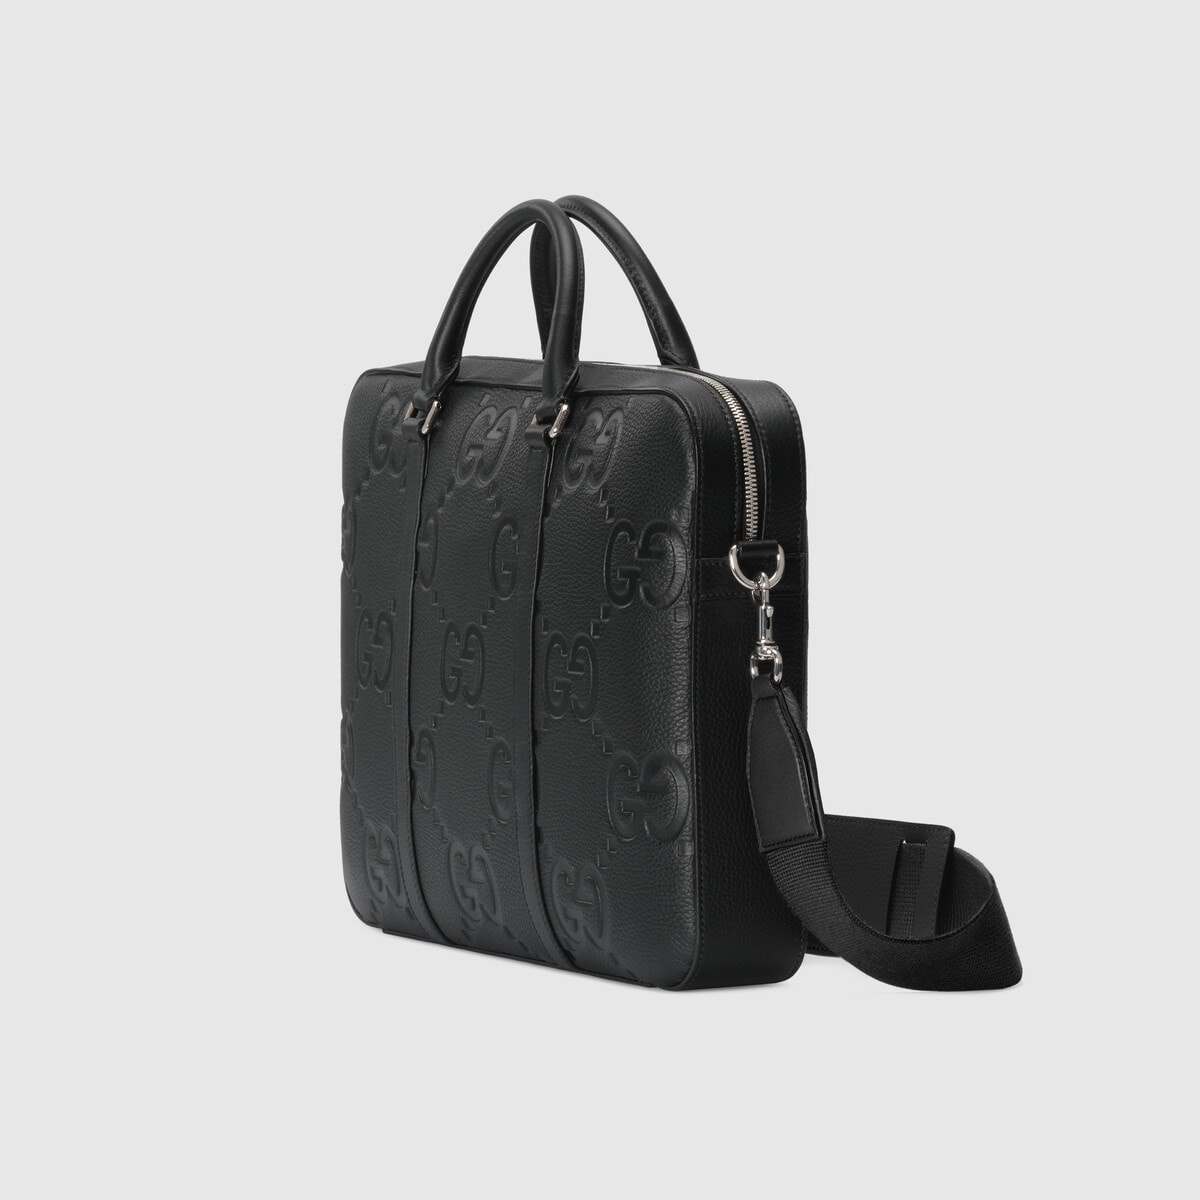 Jumbo GG briefcase - 2